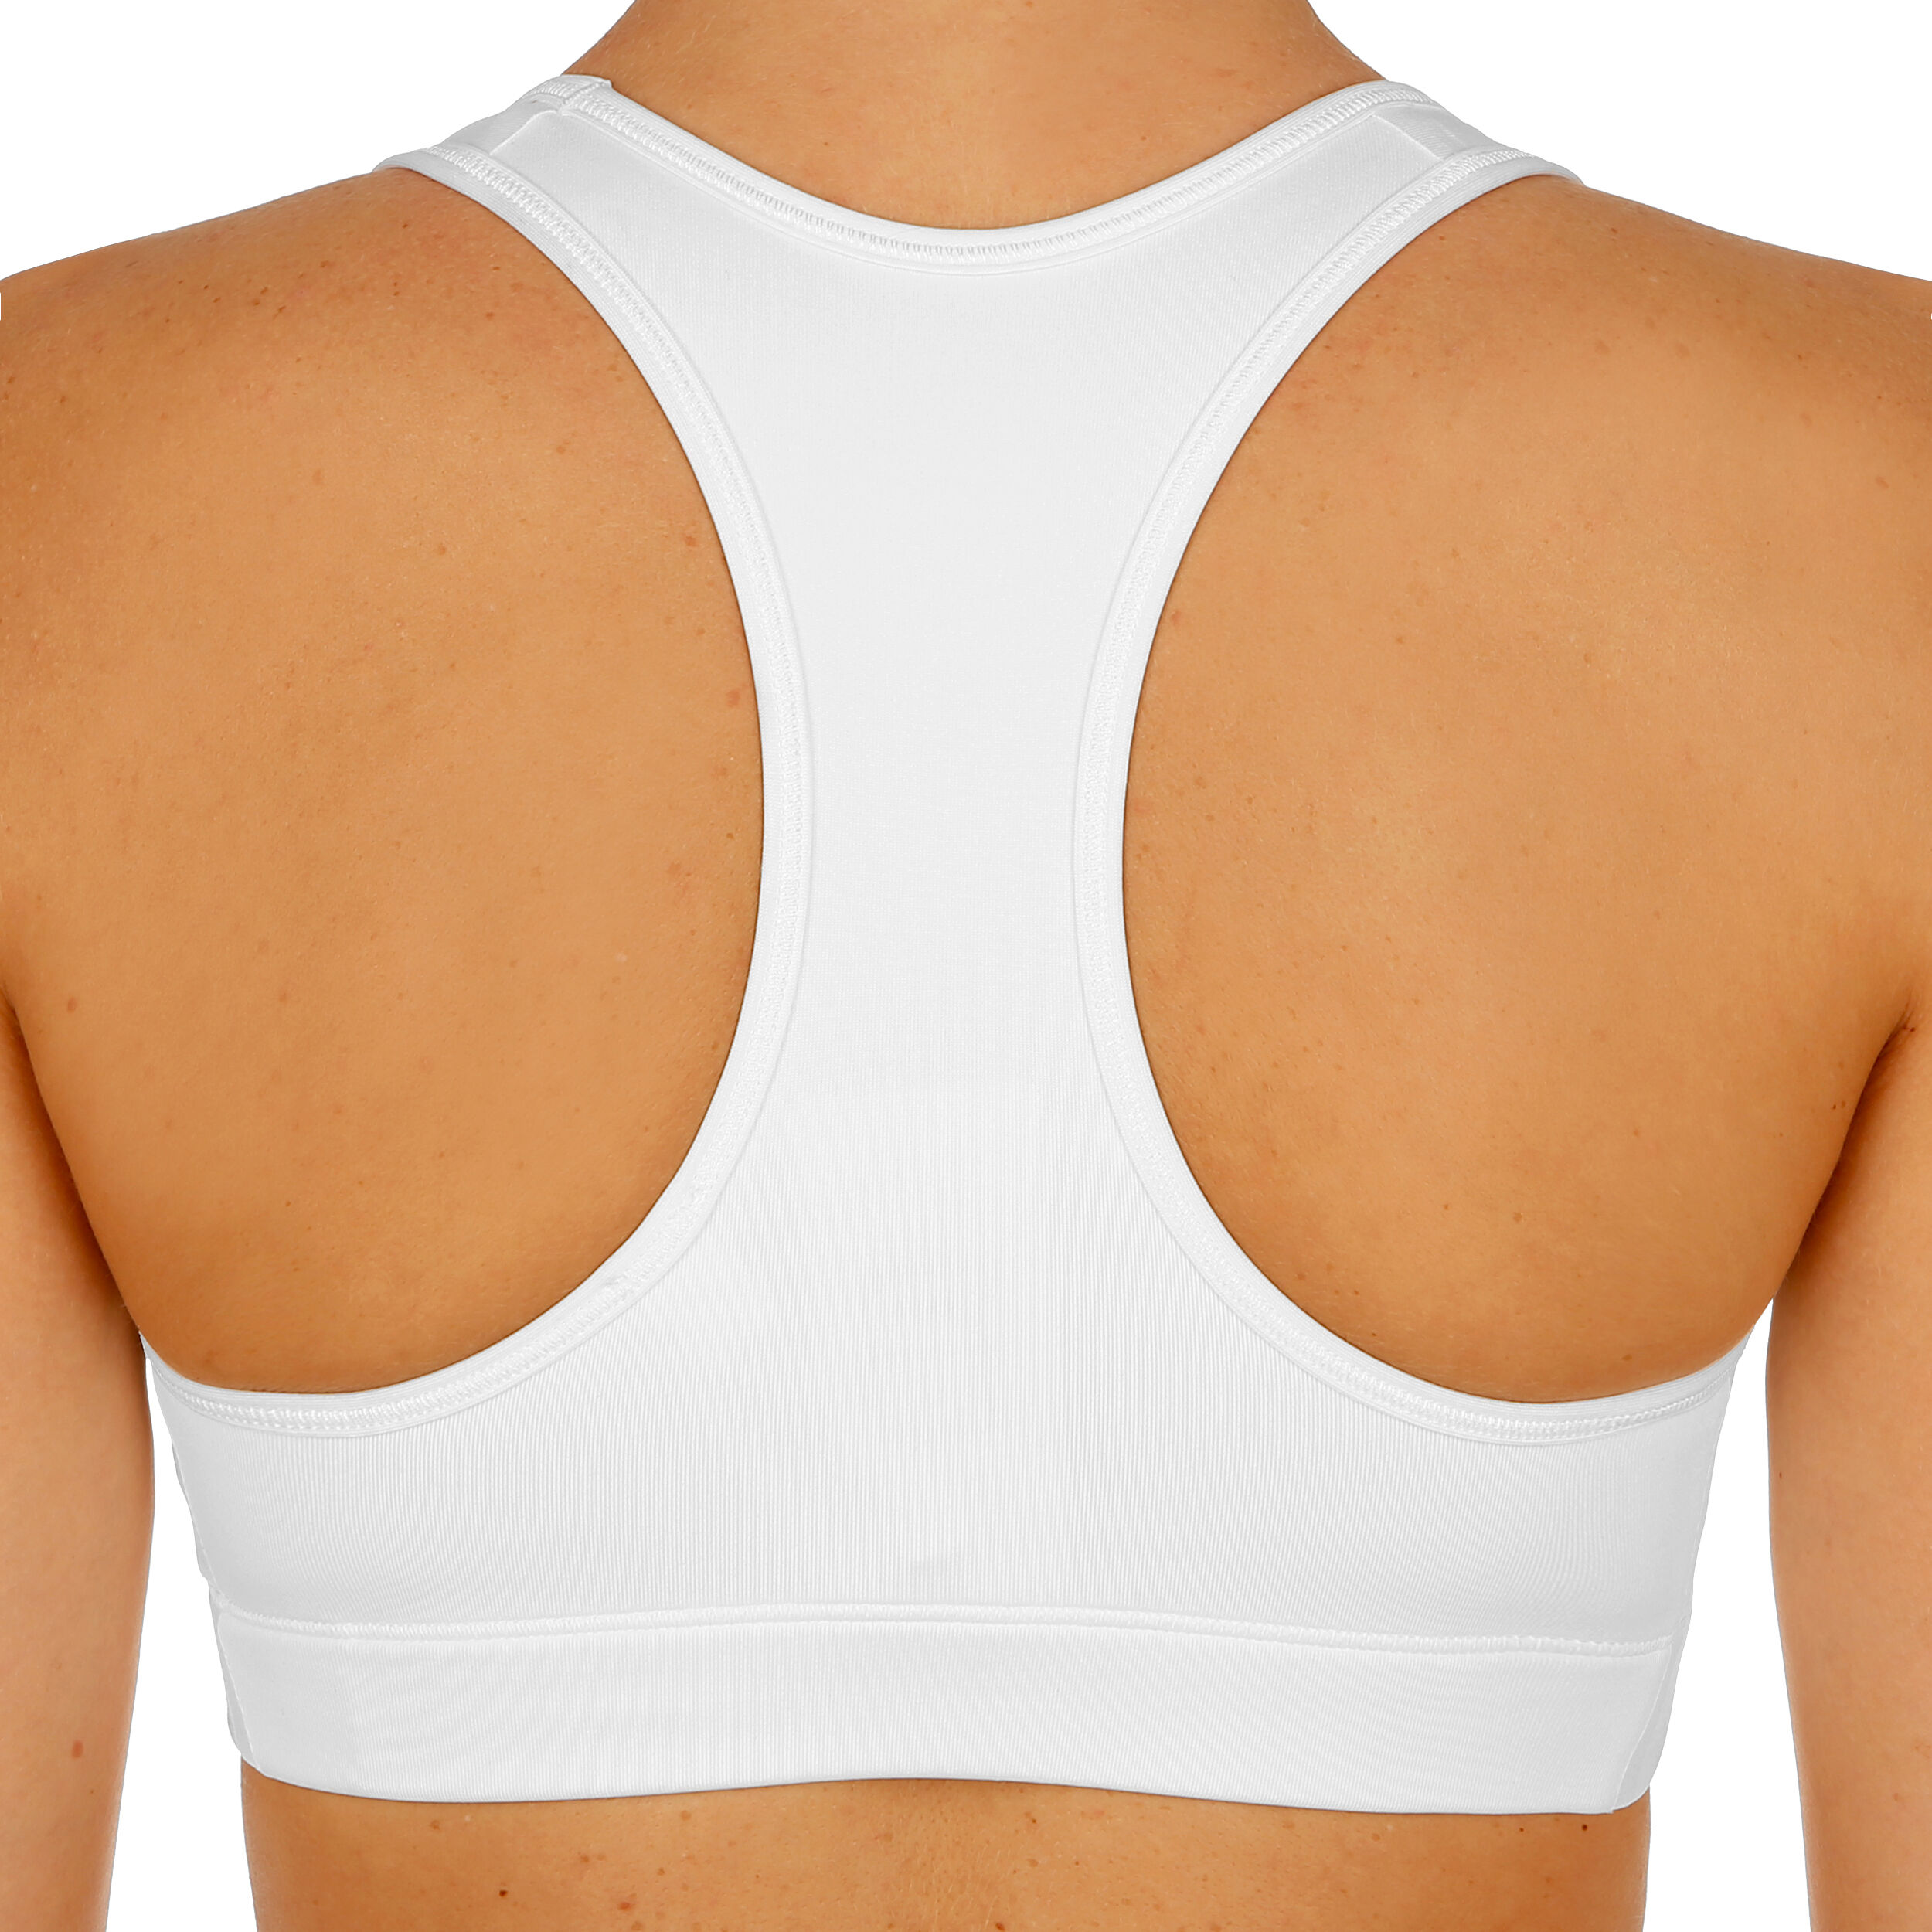 nike women's victory compression sports bra